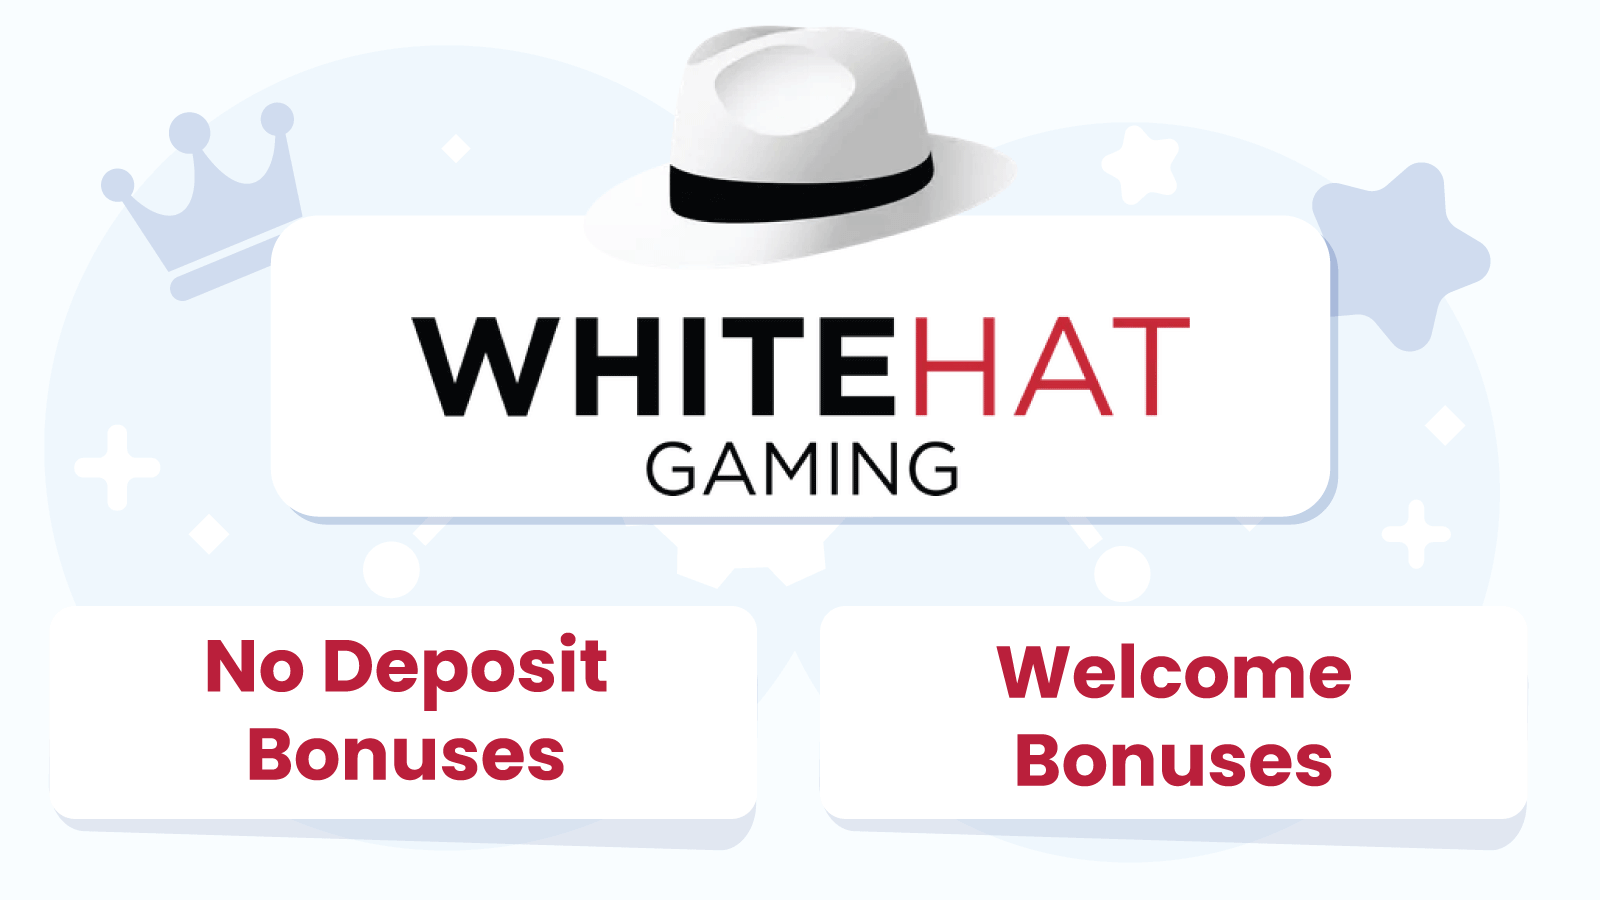 Compare White Hat Gaming Casino Bonuses